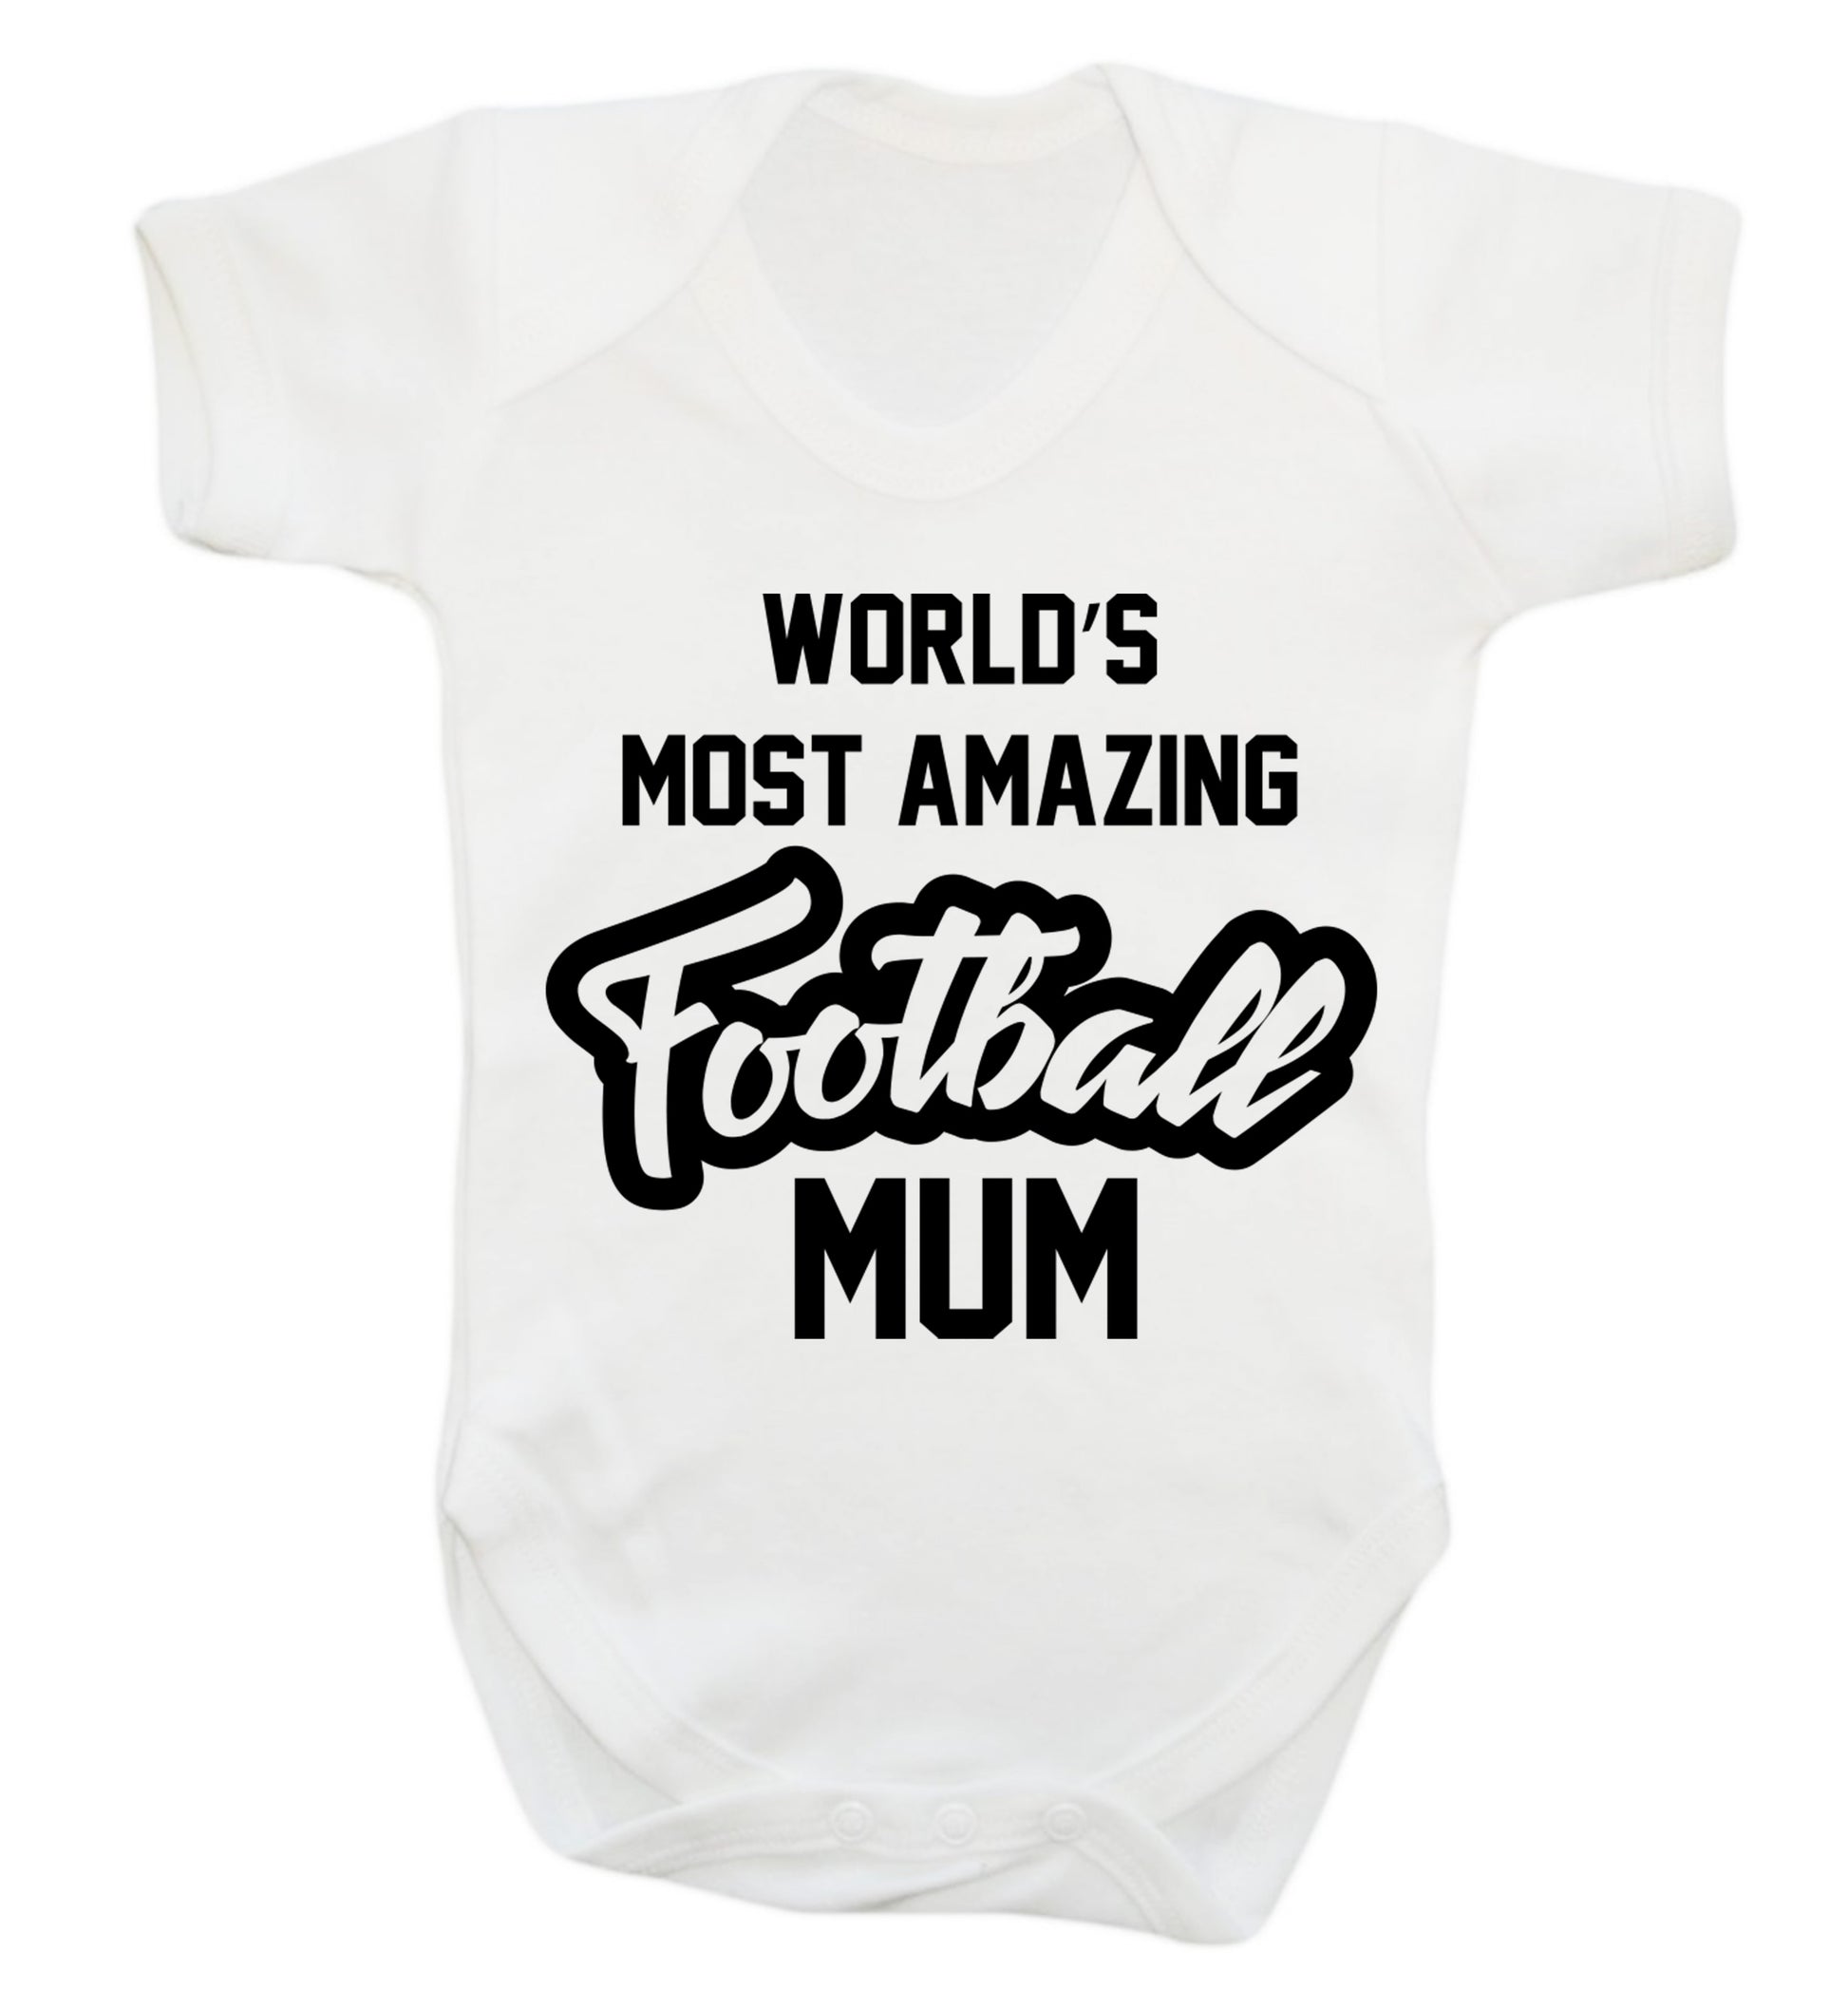 Worlds most amazing football mum Baby Vest white 18-24 months